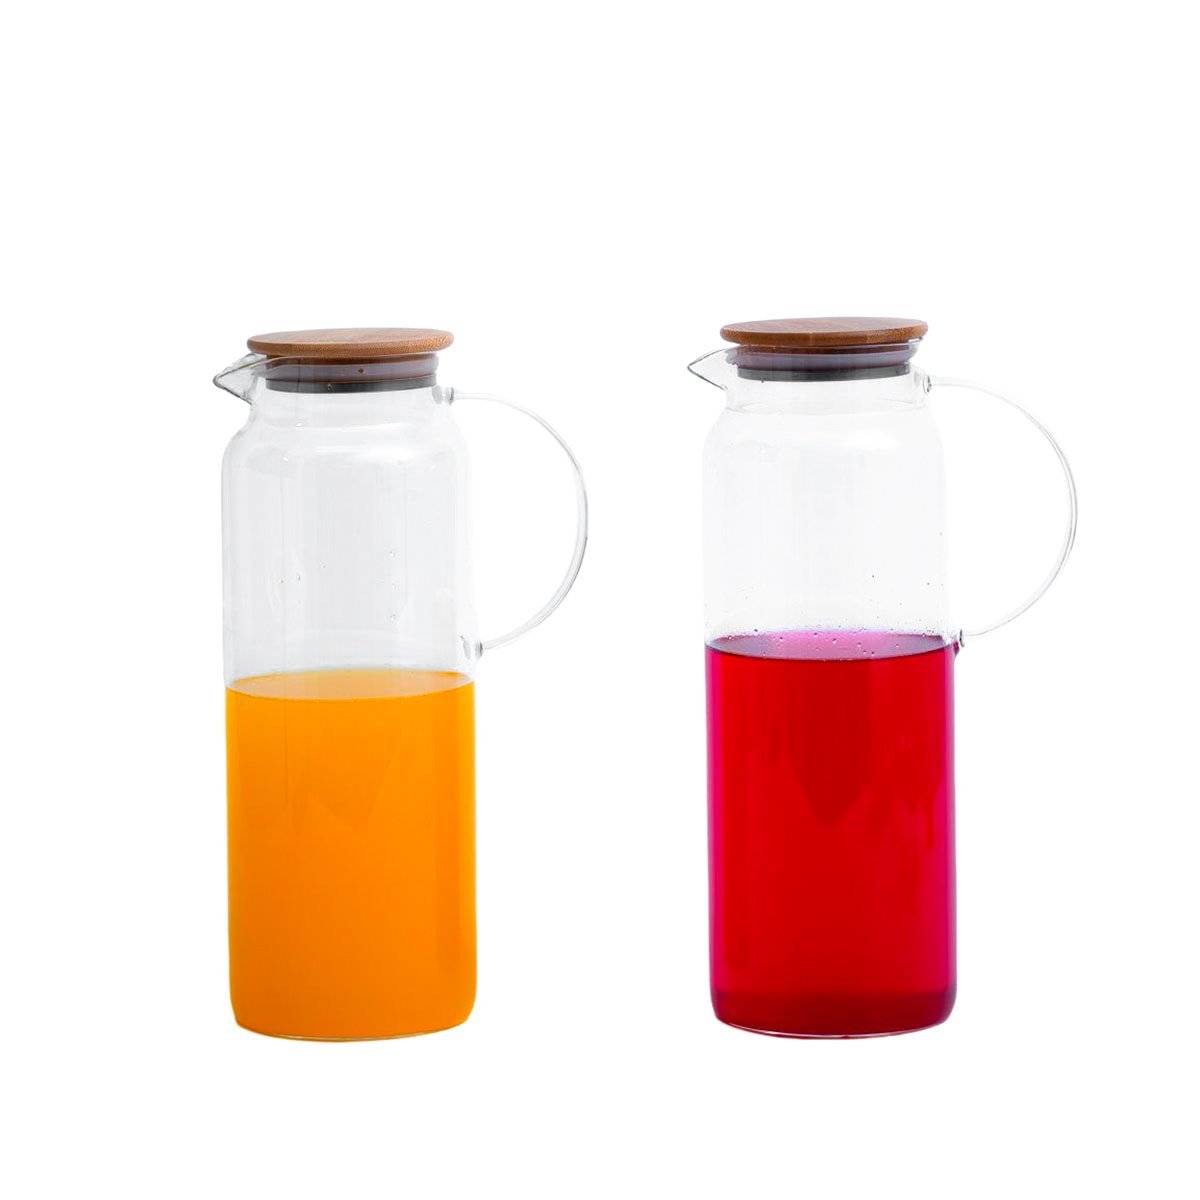 Kit 2 jarras de vidro borossilicato suco com tampa de bambu 2L - Oikos - 2